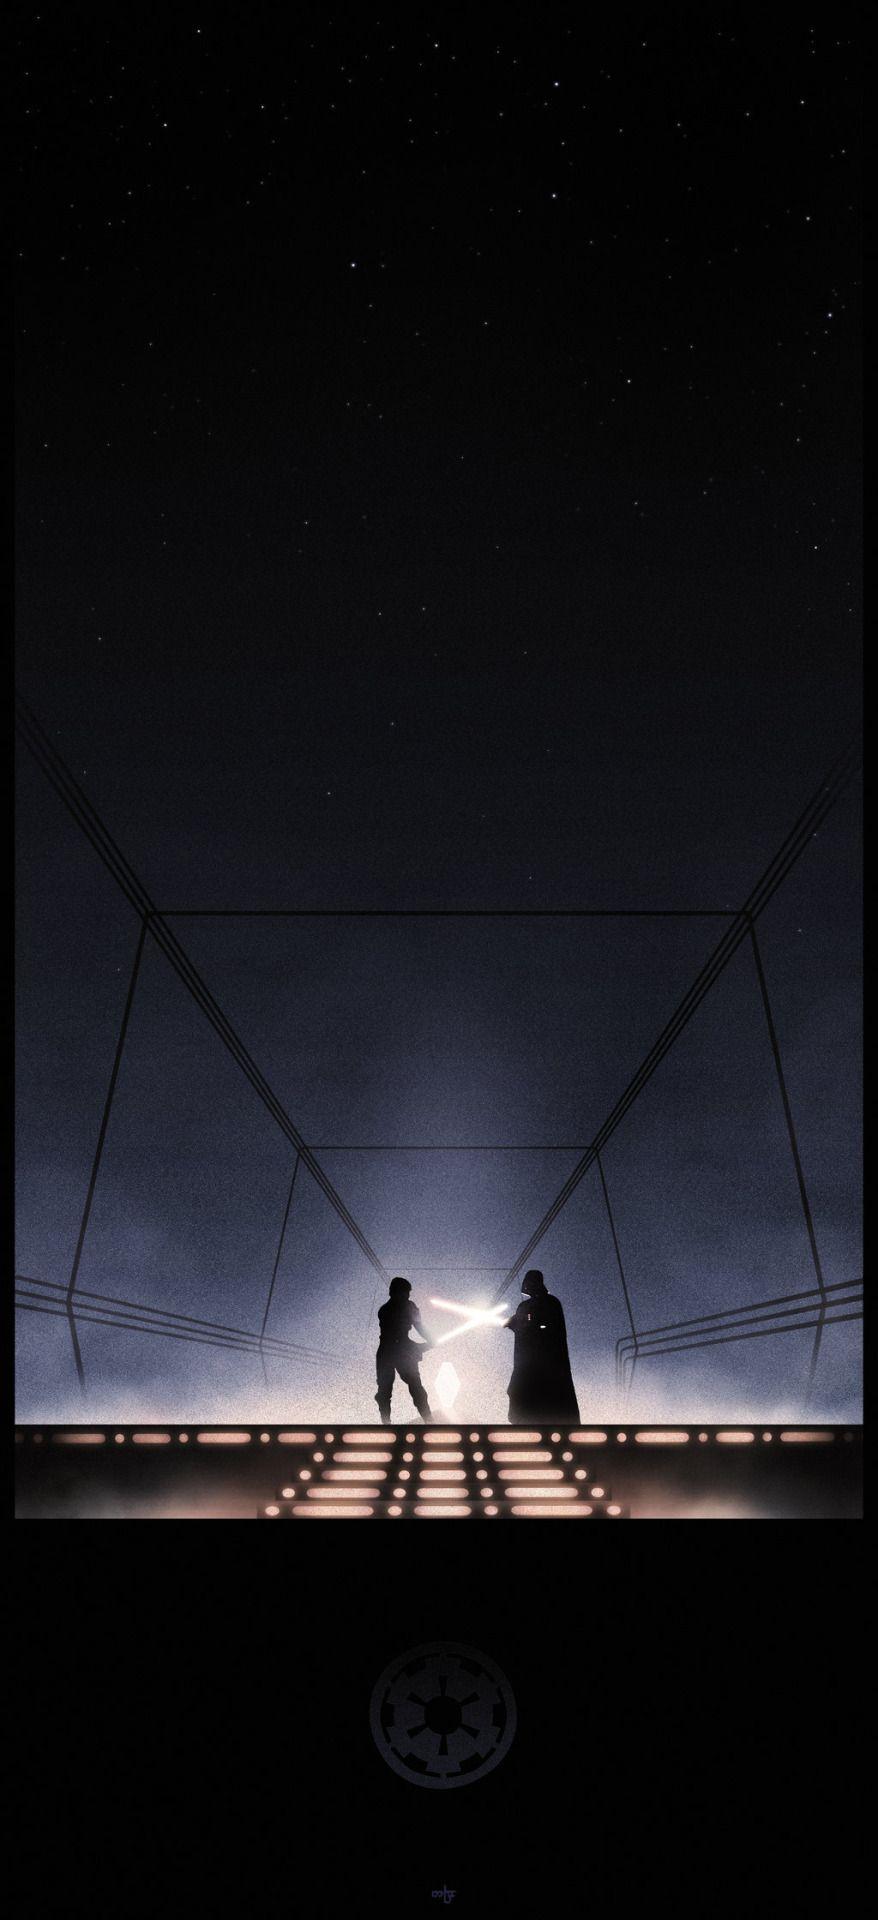 Star Wars: Lightsaber Duels by Colin Morella. Star Wars